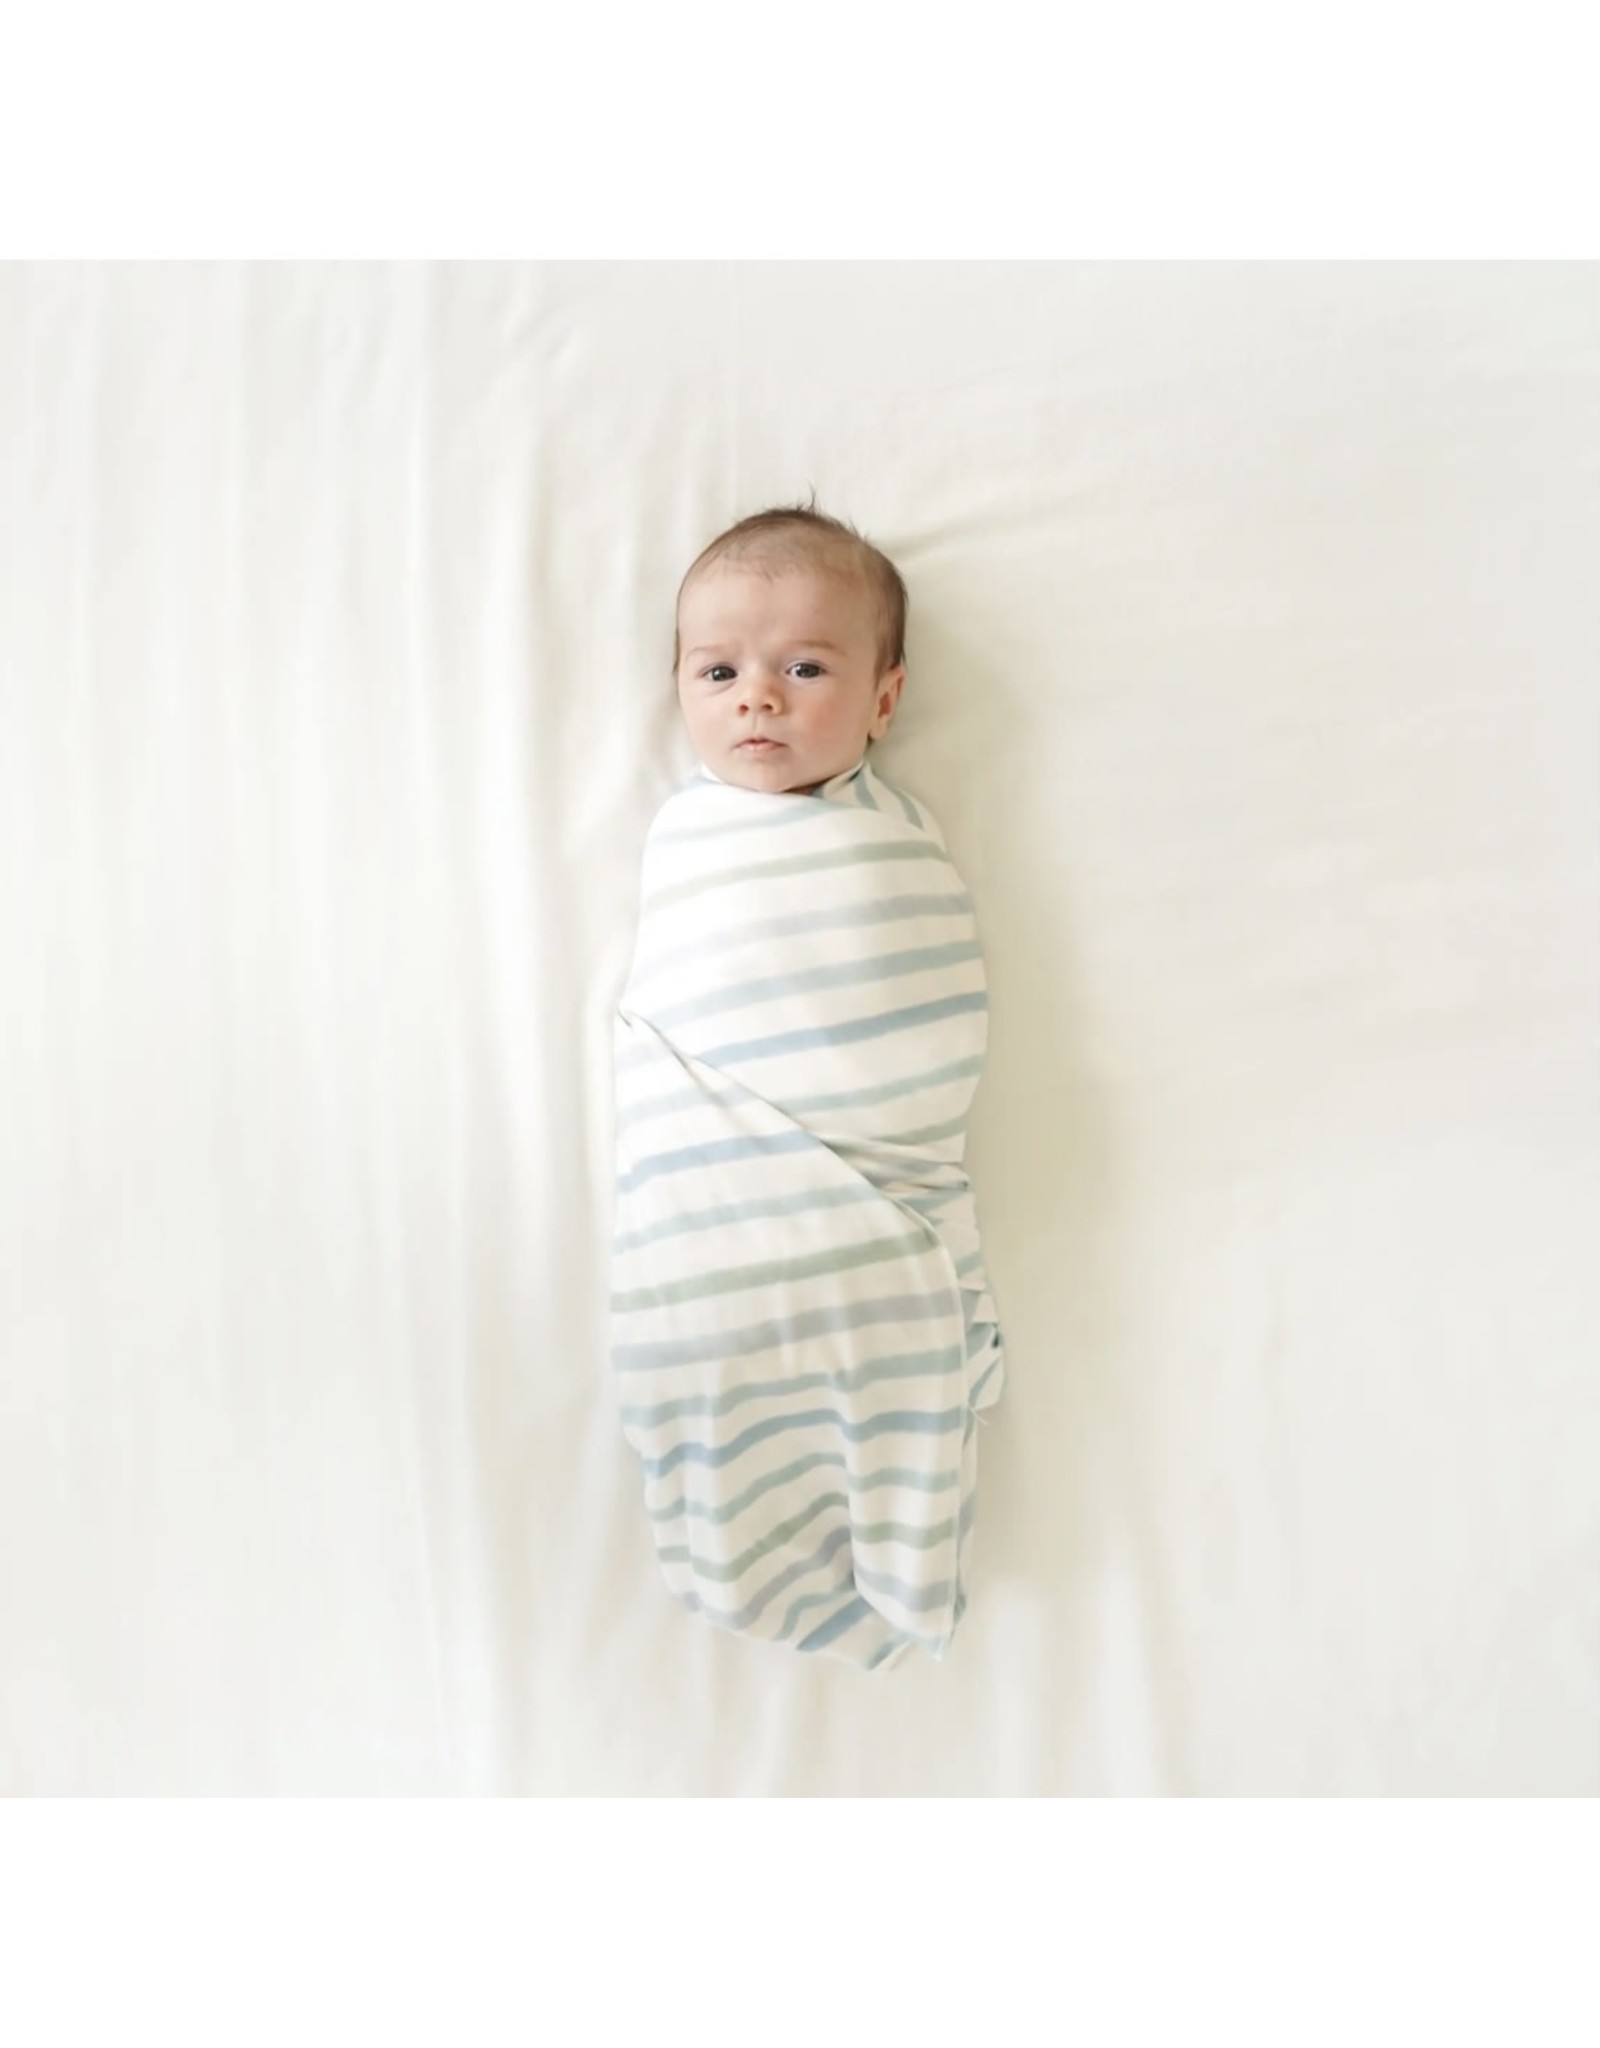 Village Baby Village Baby- Extra Soft Stretchy Knit Swaddle Blanket: Dapper Stripes